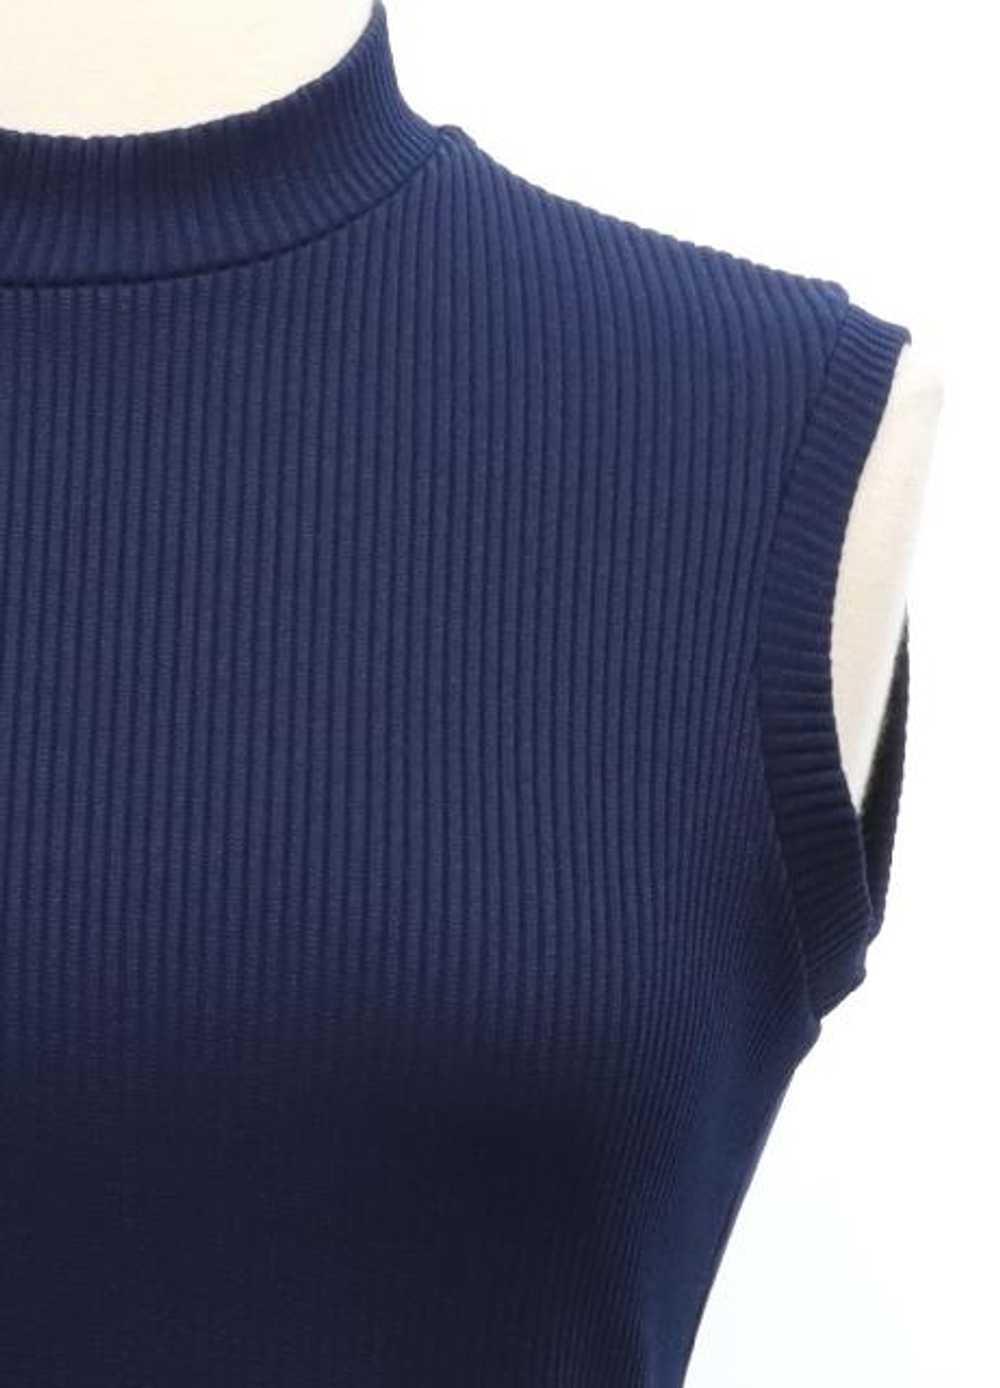 1960's Womens/Girls Mod Knit Shirt - image 2